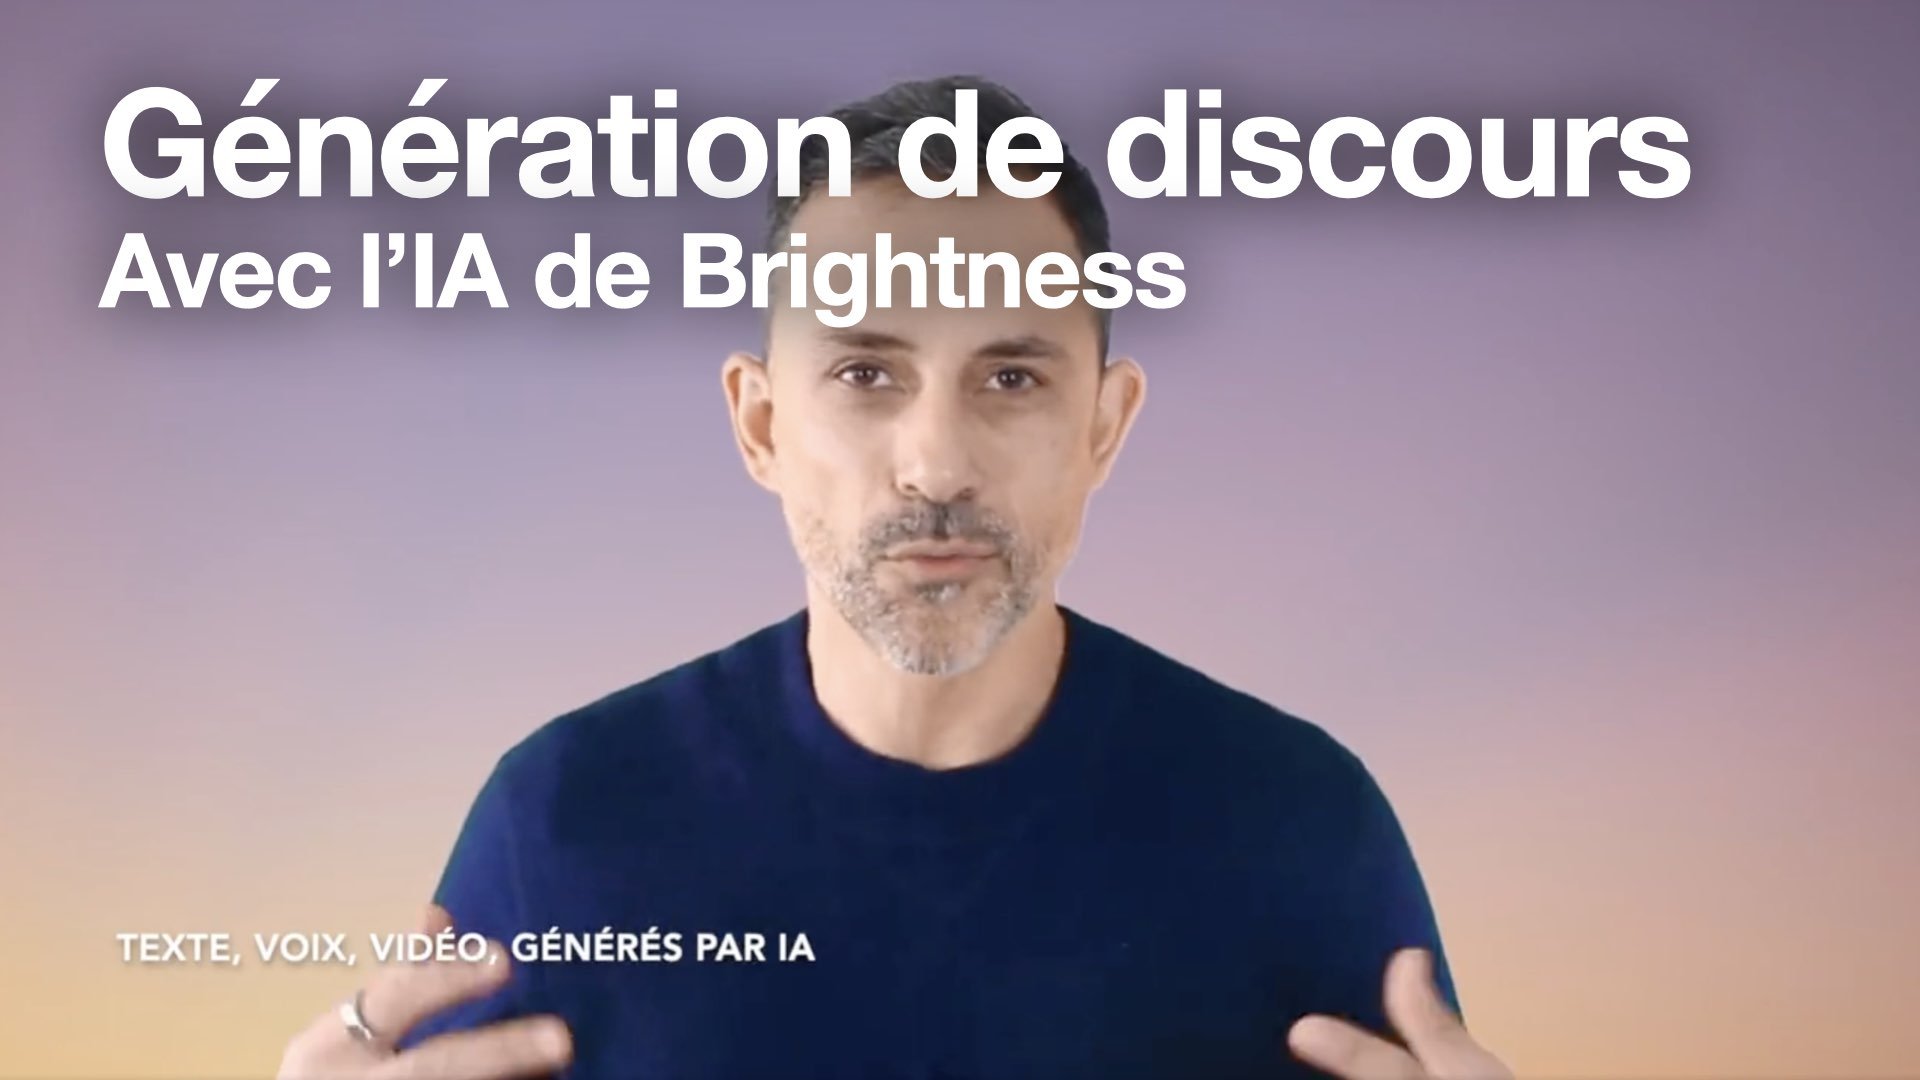 Generate inspiring speeches with Brightness AI.